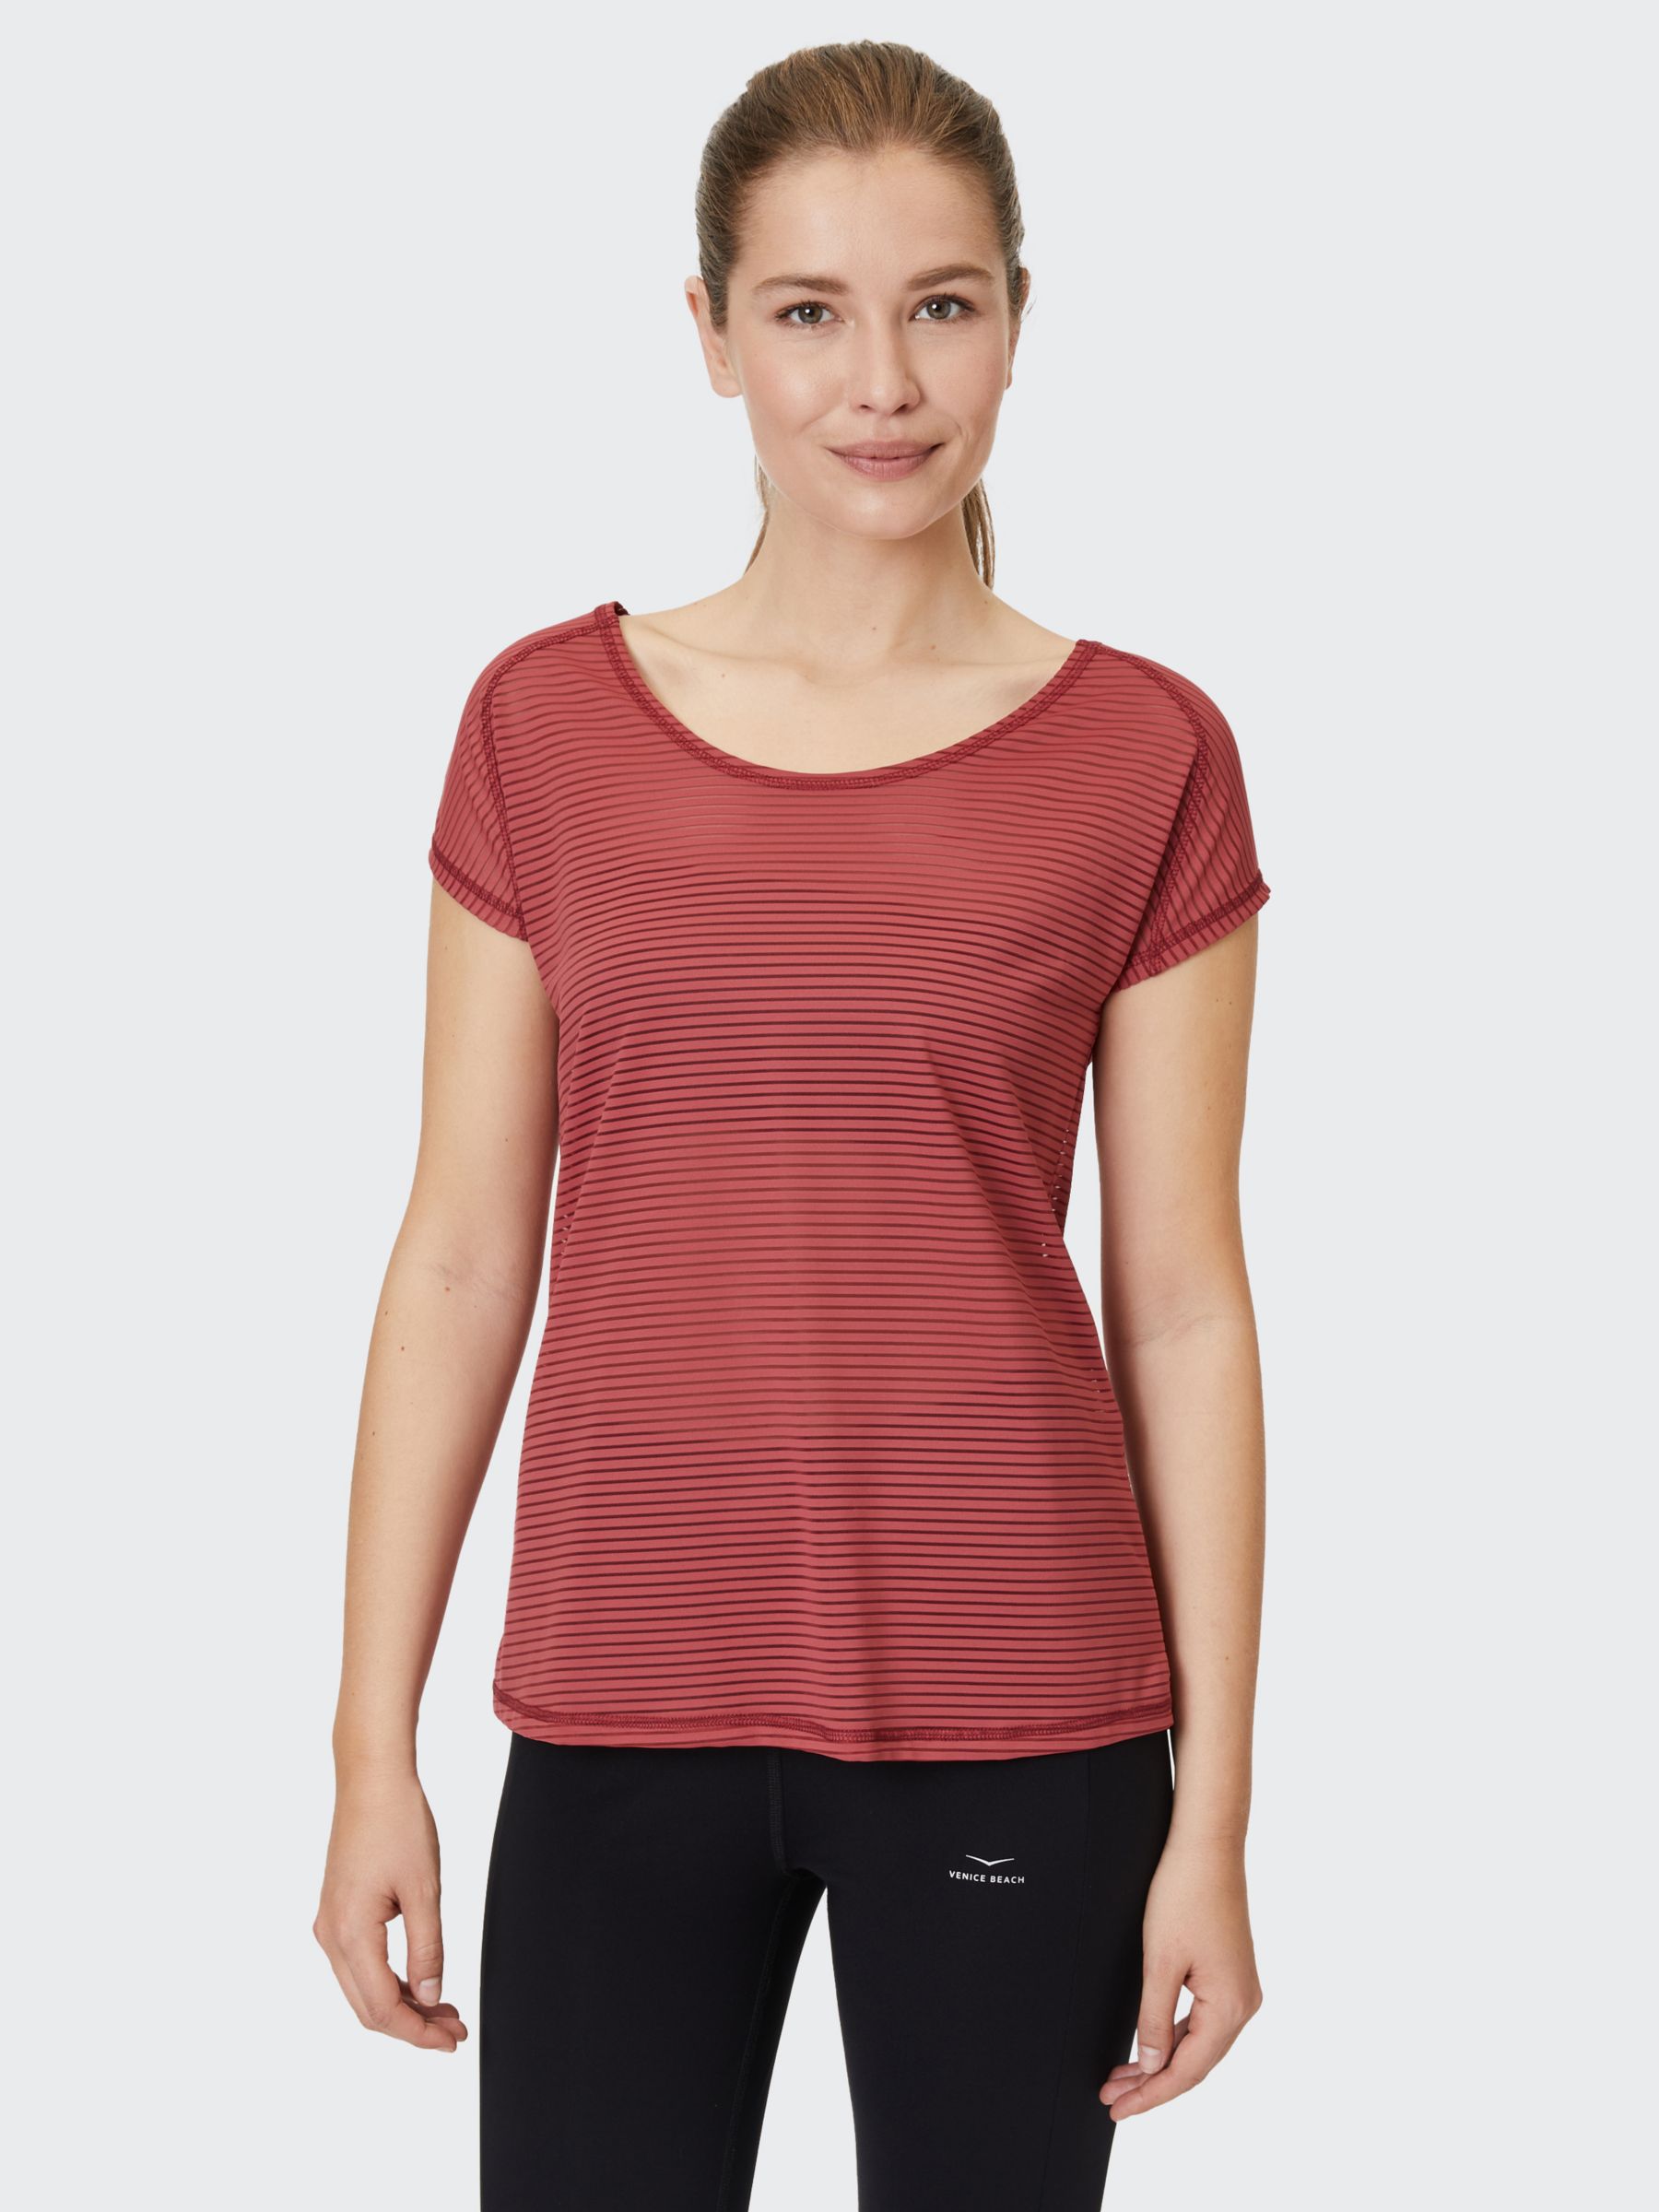 Women's Short Sleeve T-Shirts | John Lewis & Partners